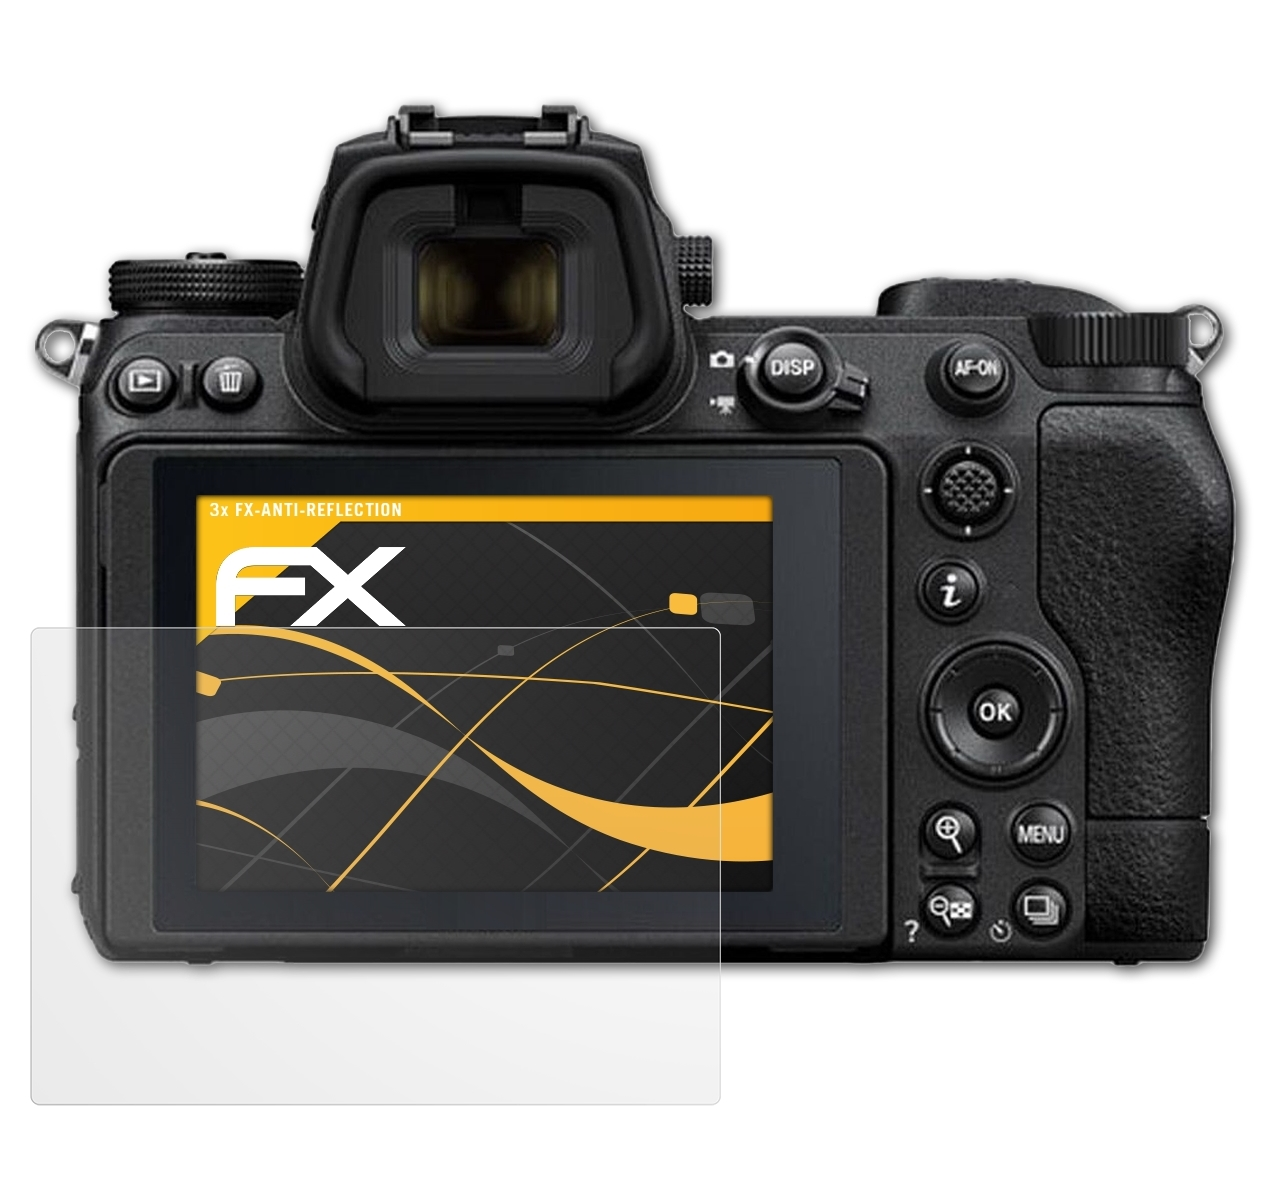 ATFOLIX FX-Antireflex 3x Z6 Nikon II) Displayschutz(für